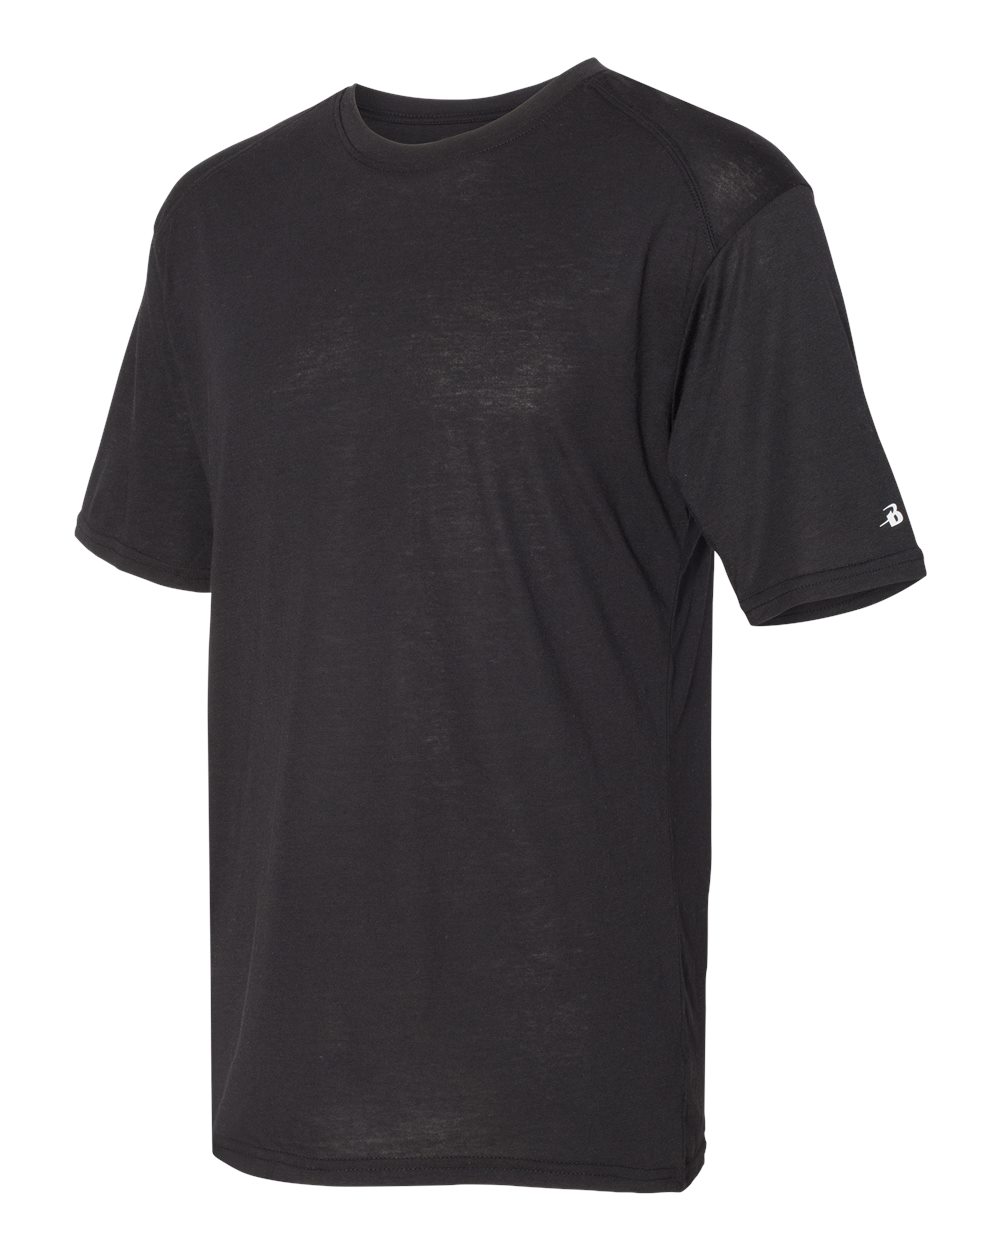 Badger 4940 - Men's Triblend Performance Short Sleeve T-Shirt